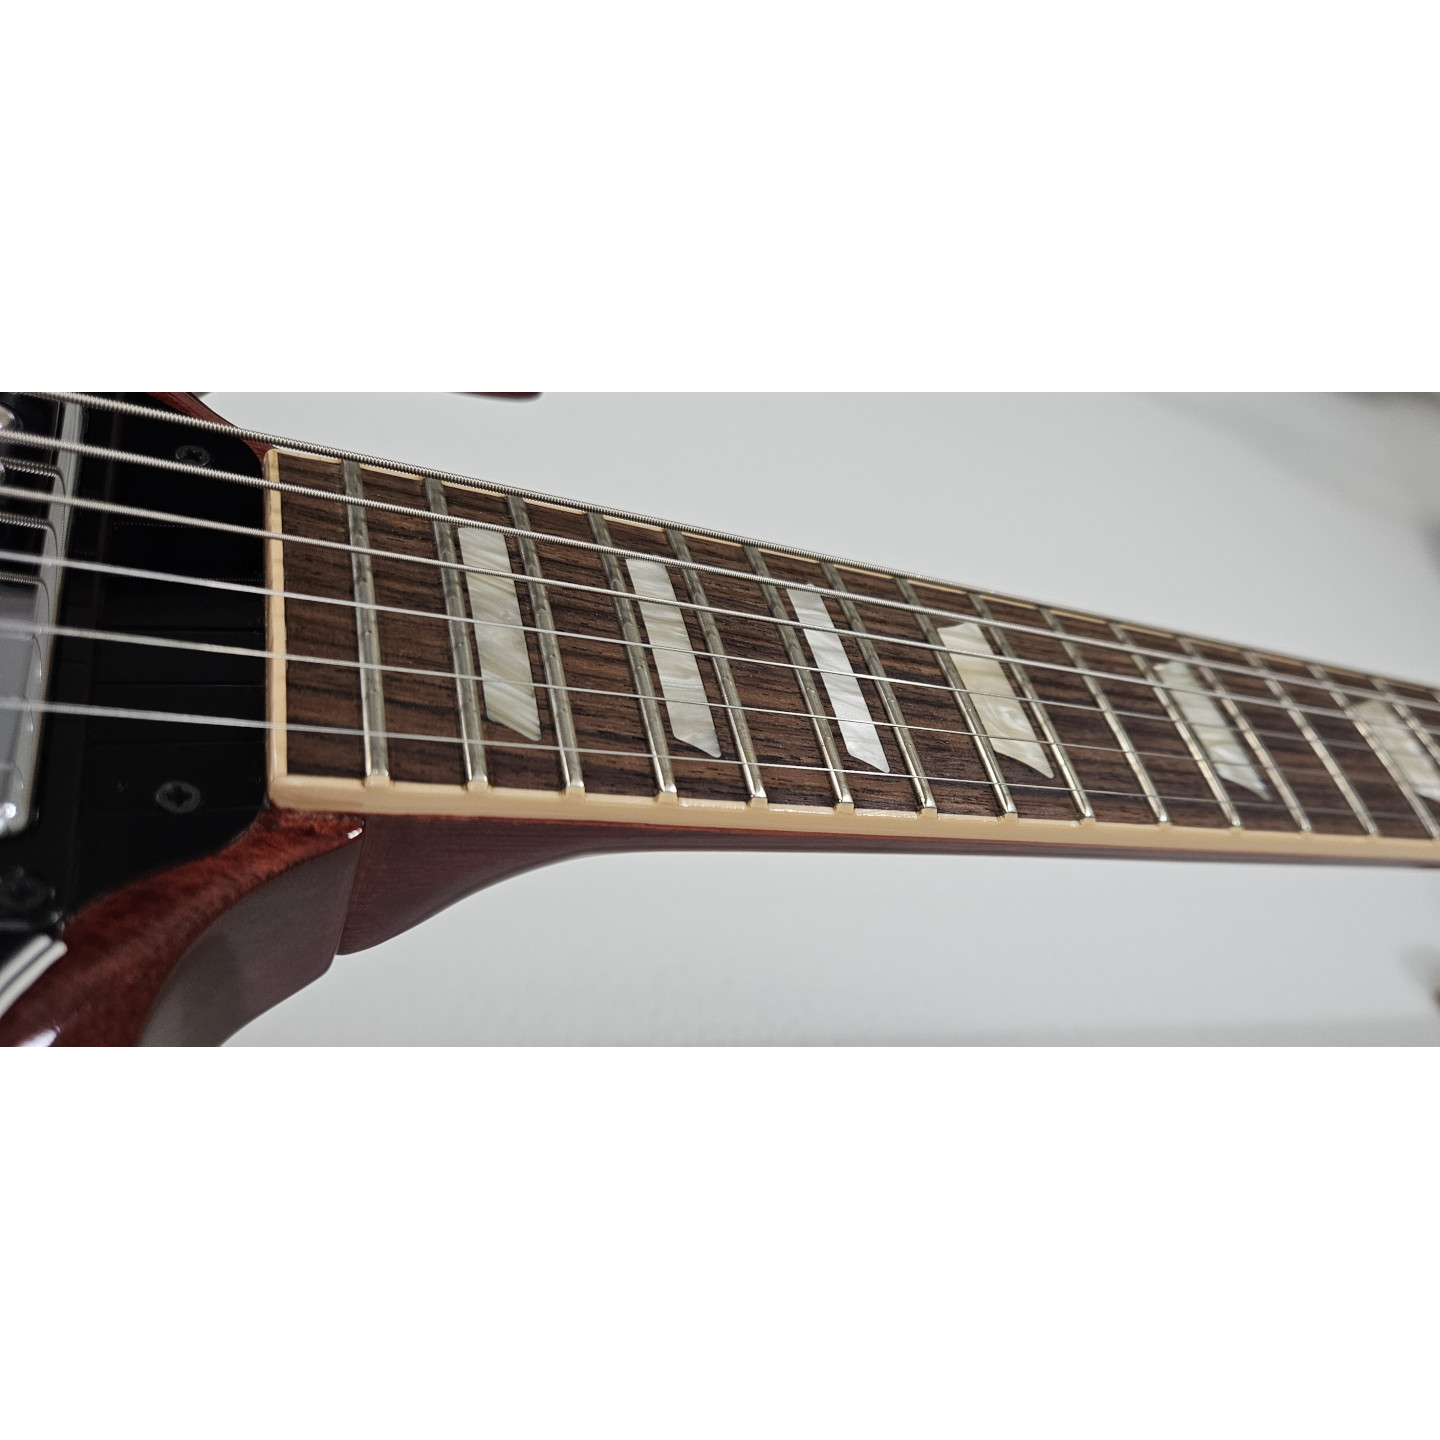 2014 Gibson Derek Trucks SG Signature Vintage Cherry Red Stain Electric Guitar